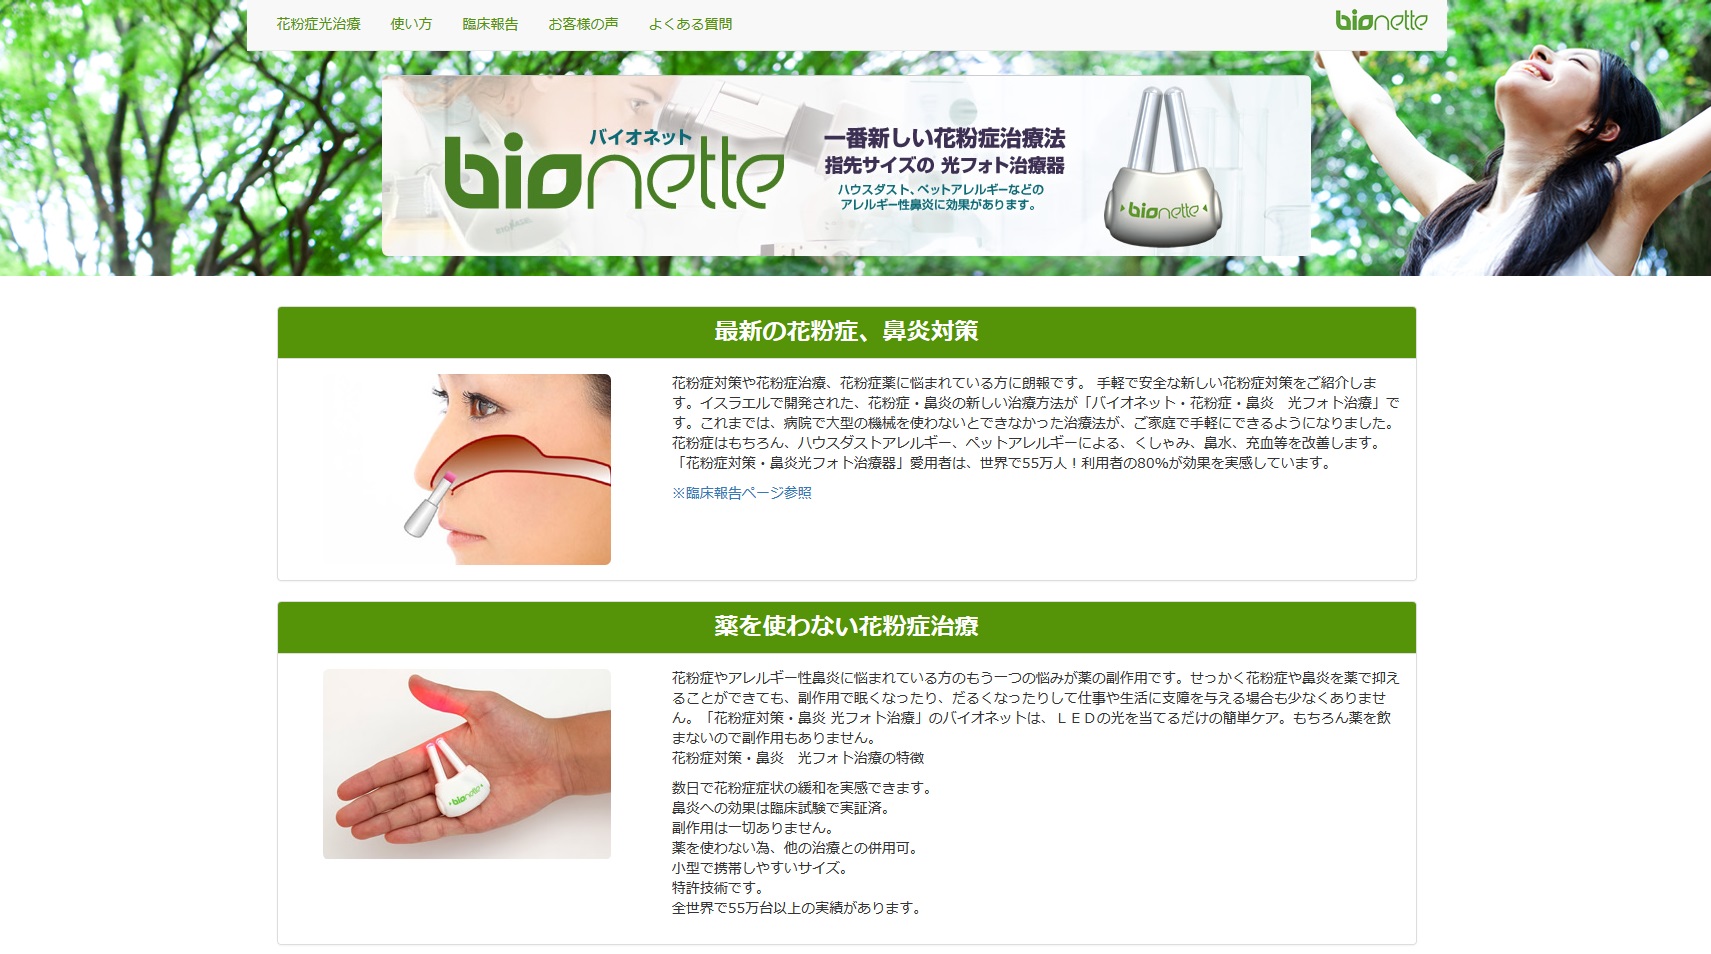 Bionette Japan